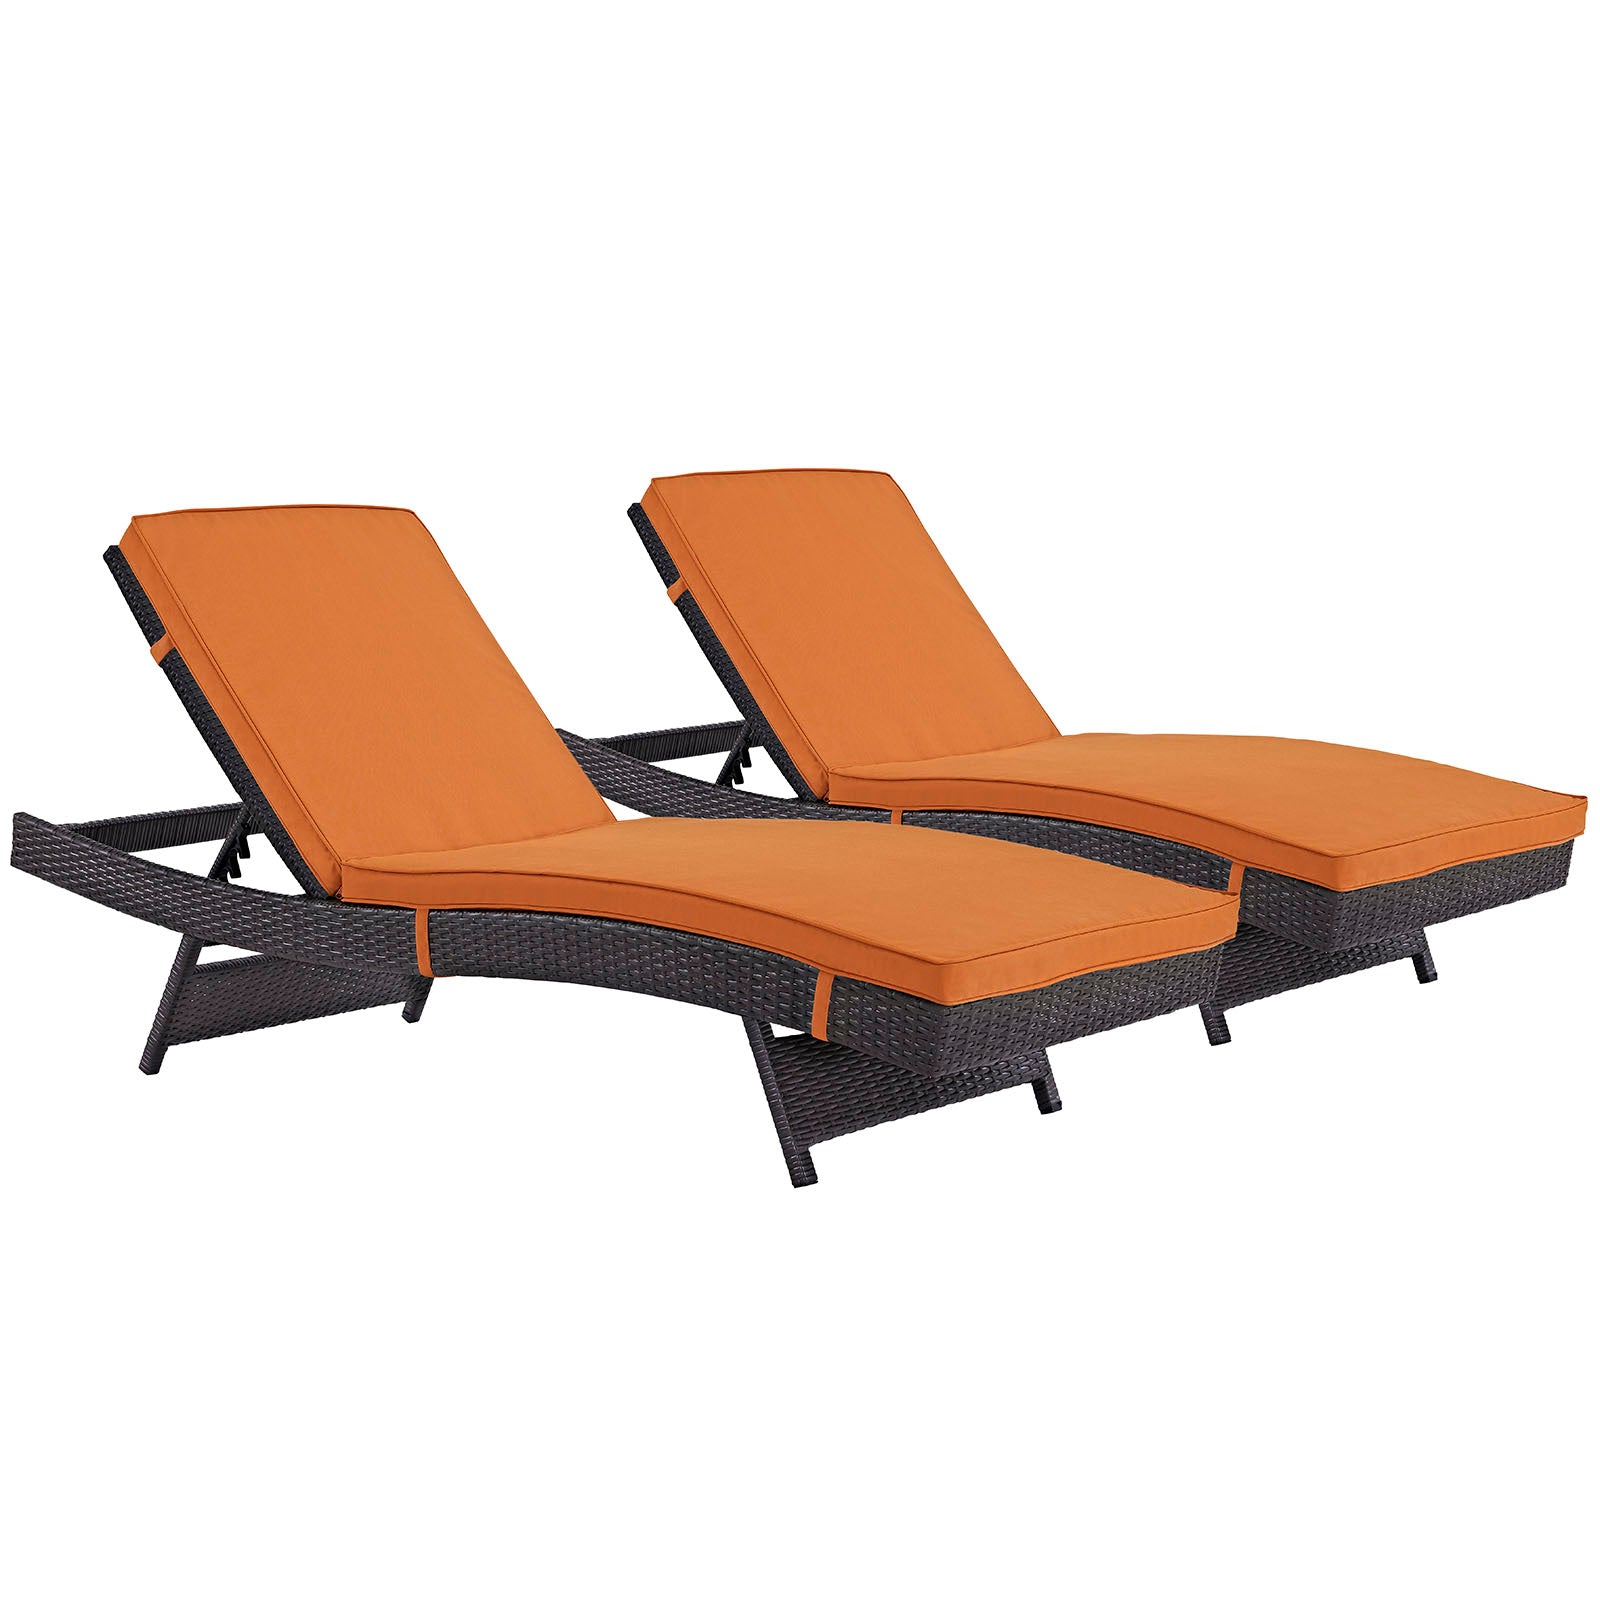 Modway Outdoor Loungers - Convene Chaise Outdoor Patio Set of 2 Espresso Orange